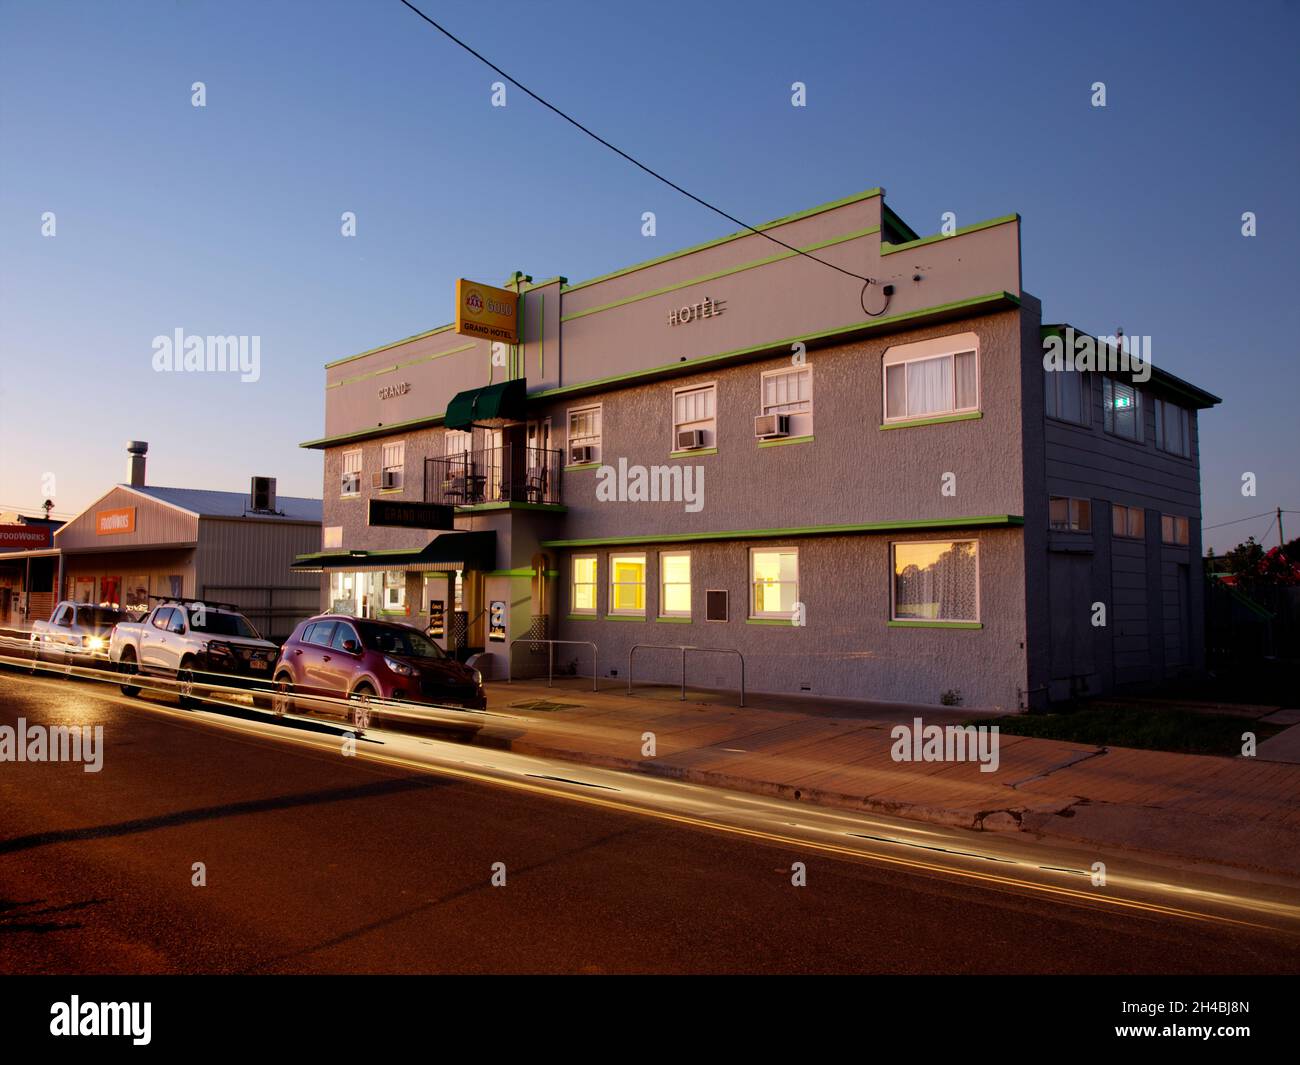 El Grand Hotel de estilo inter-guerra art deco en Edward Street Biggenden Queensland Australia Foto de stock